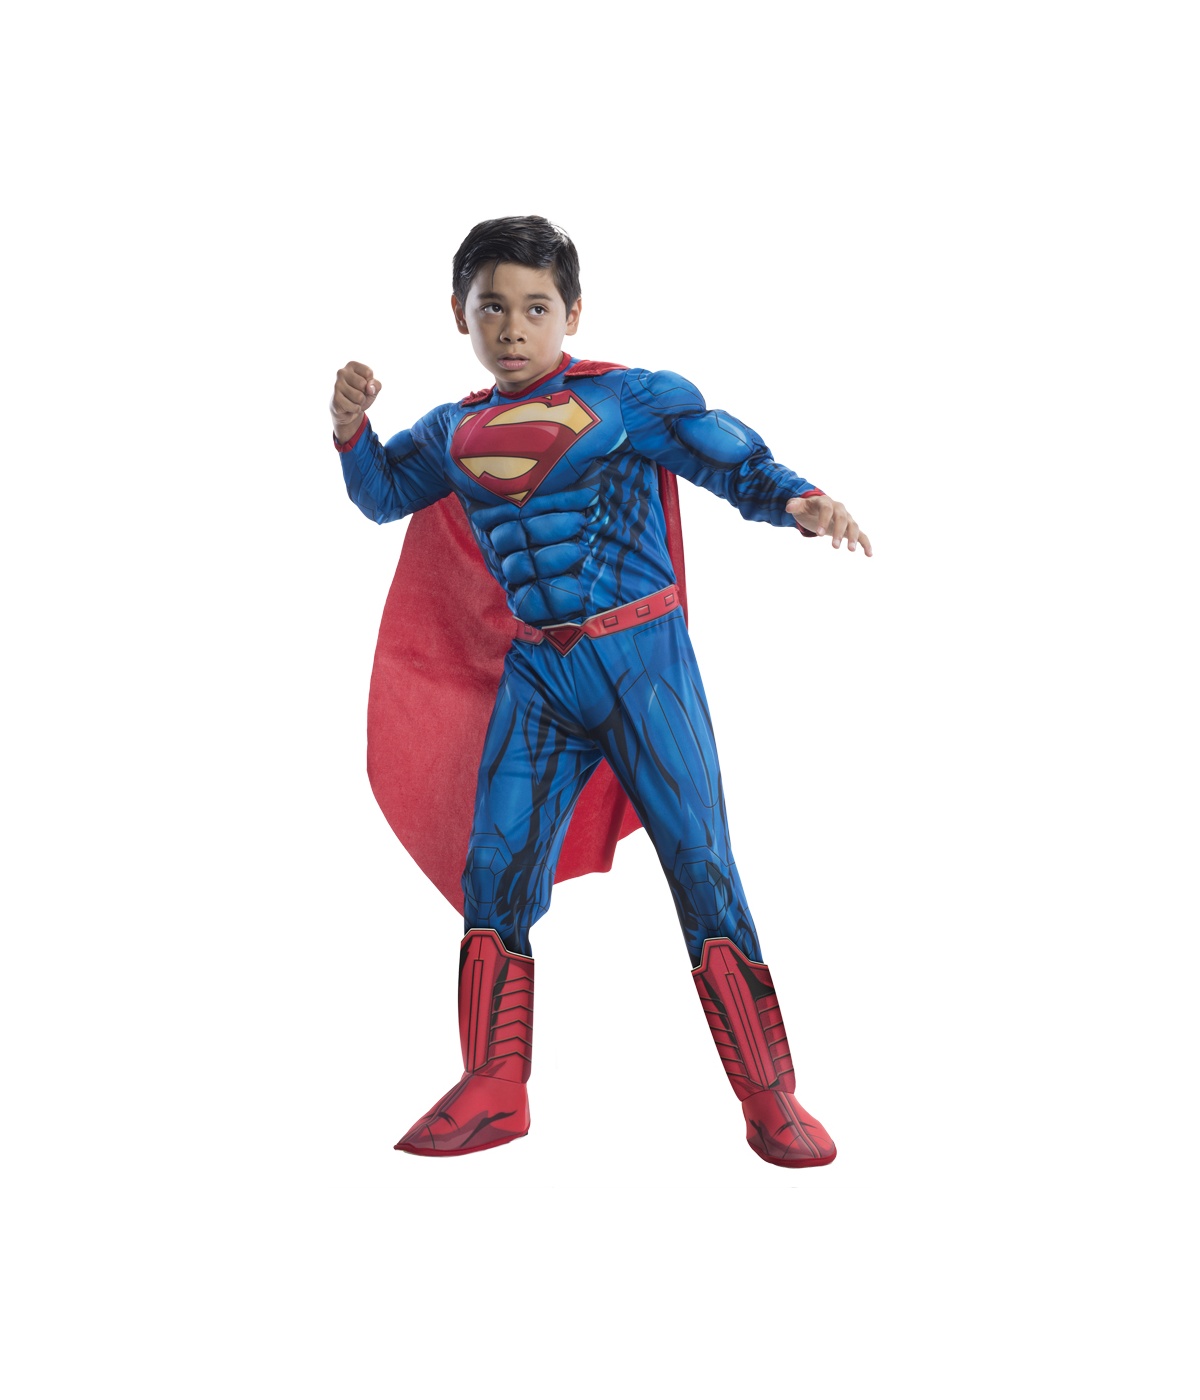  Boys Dc Comics Superman Costume